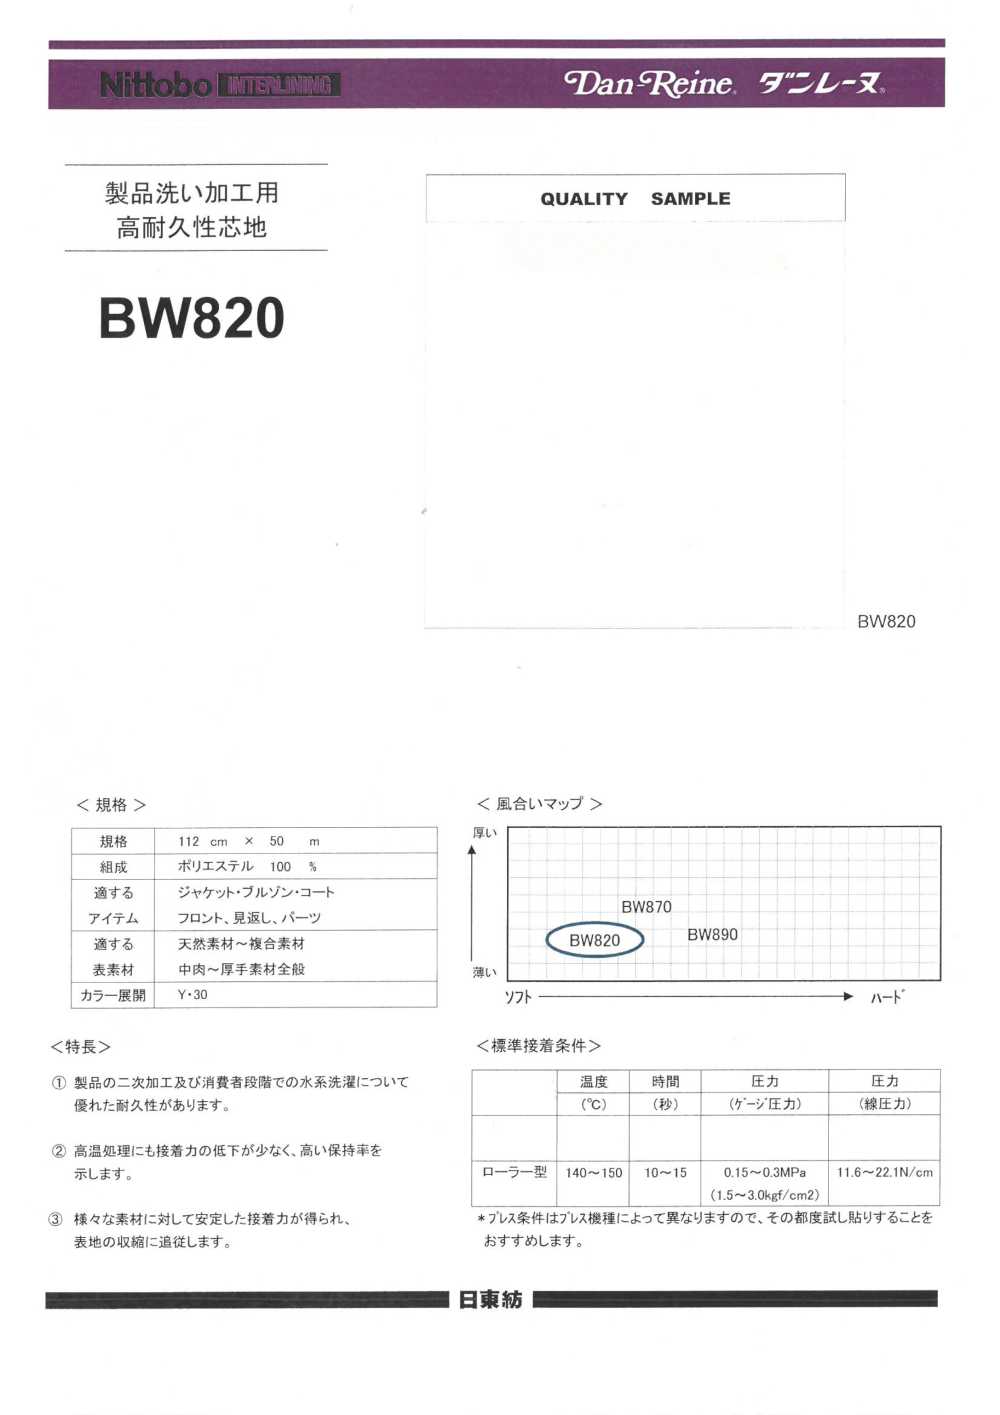 BW820 Procesamiento De Lavado De Productos/lavado A Base De Agua Entretela Duradera (30D) Nittobo